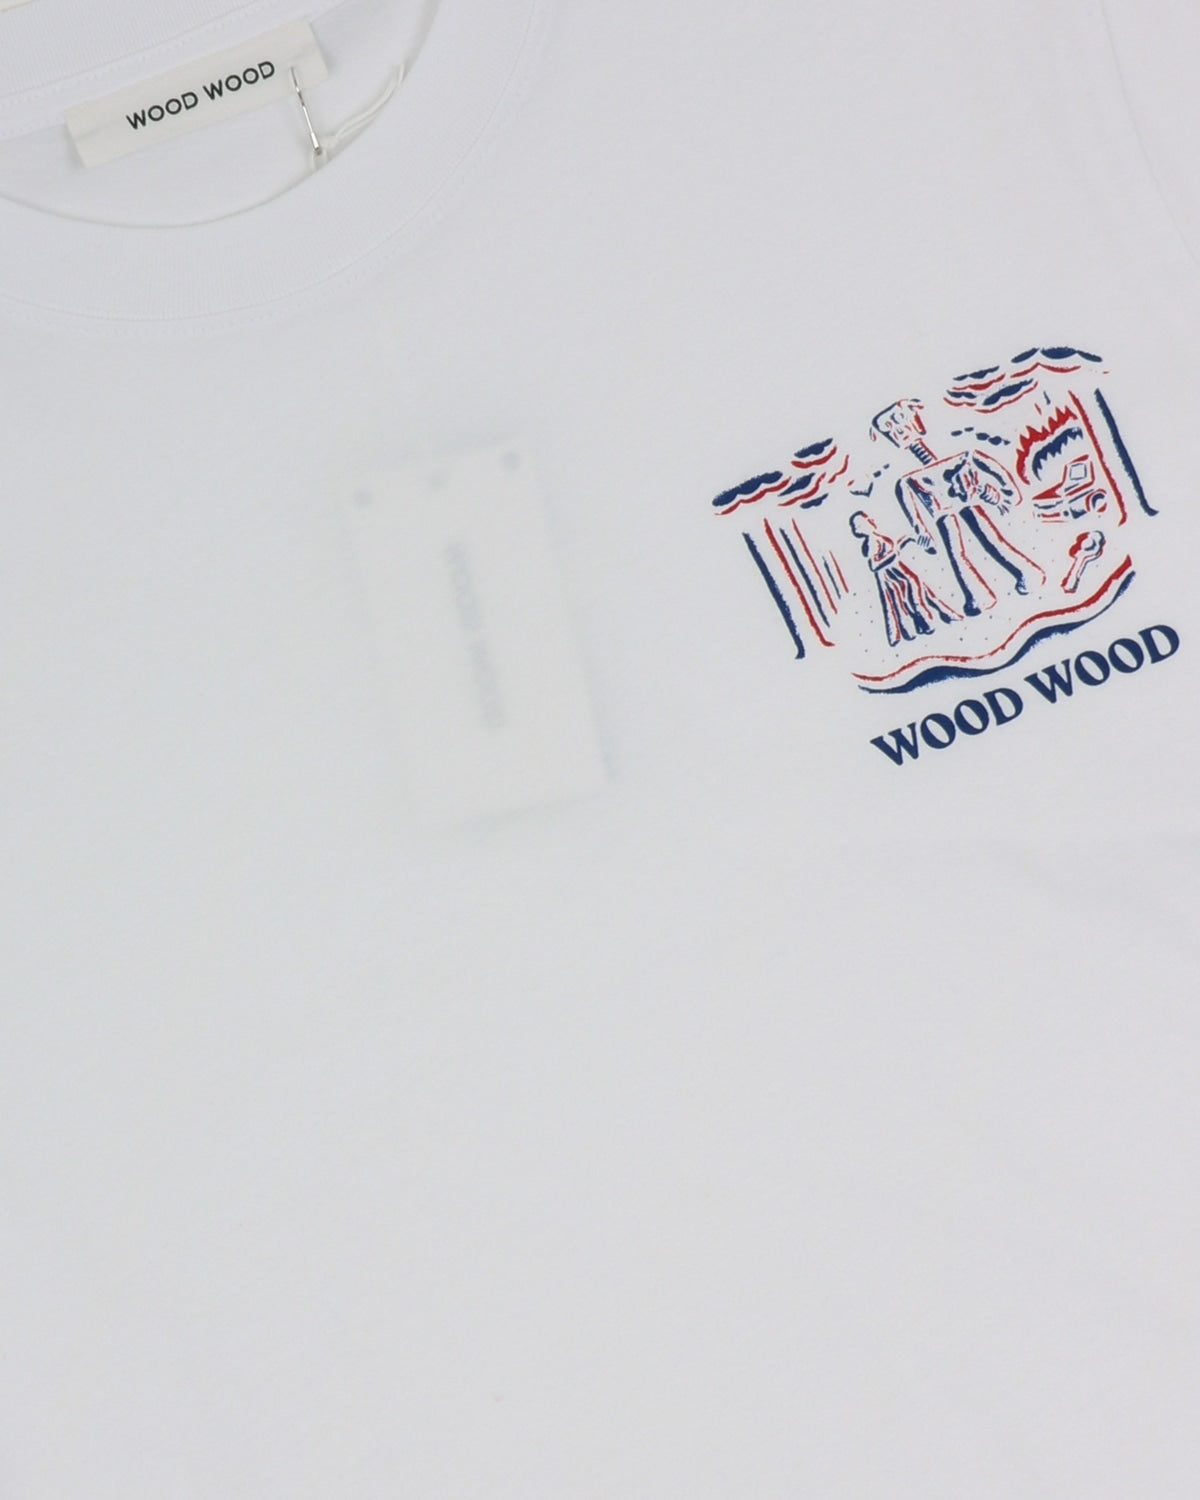 wood wood_bobby jc robot t-shirt_white_2_2